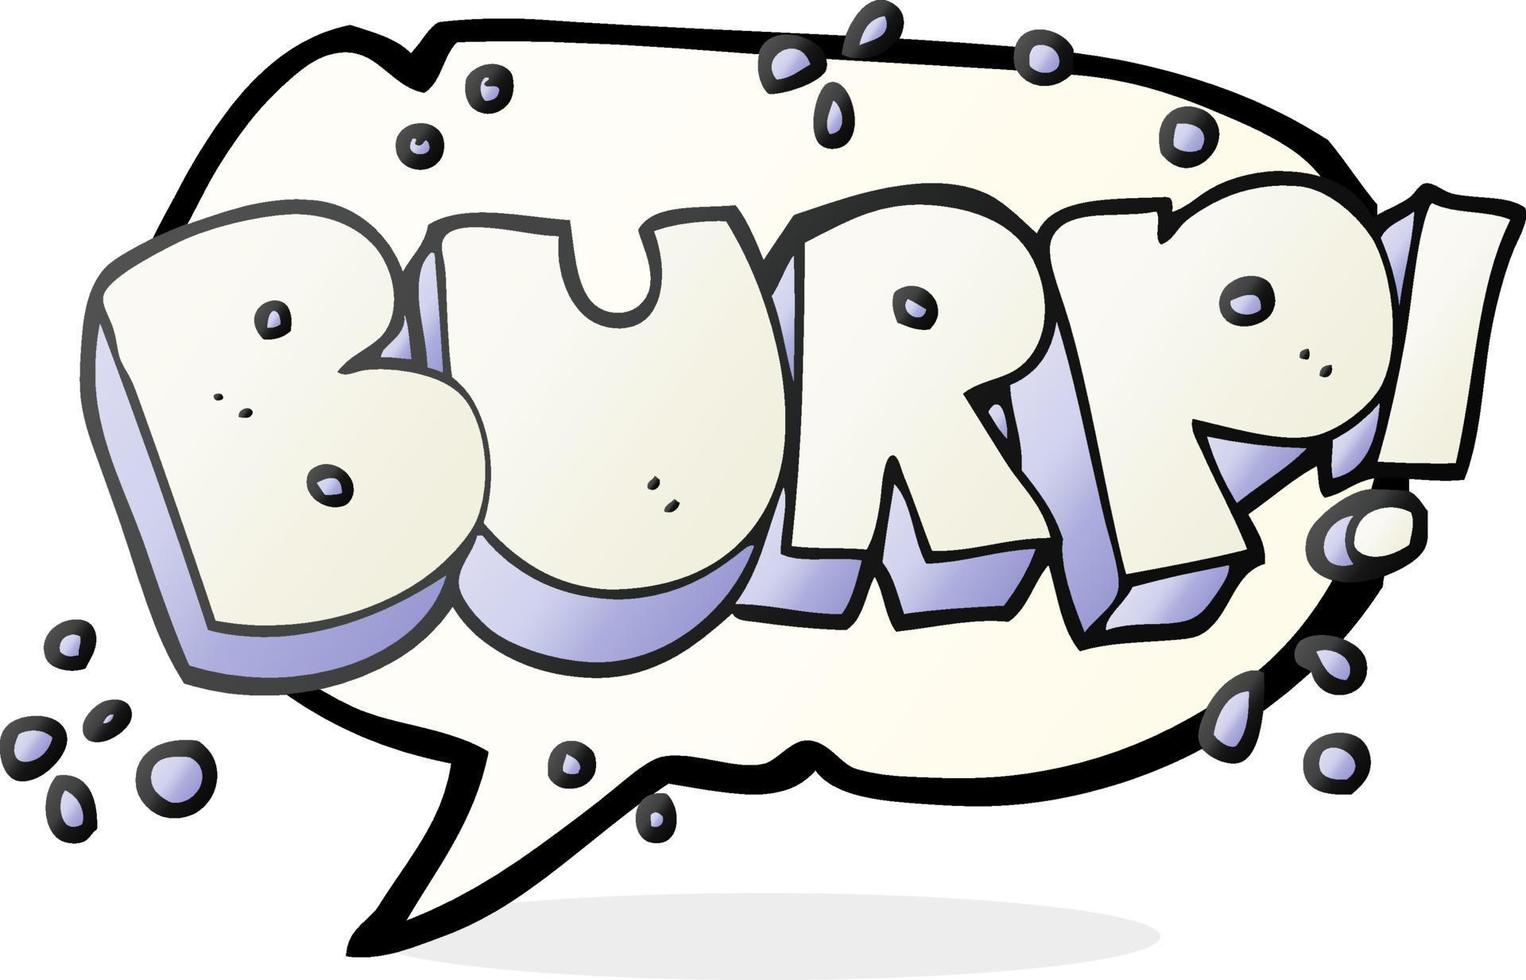 freehand drawn speech bubble cartoon burp text vector